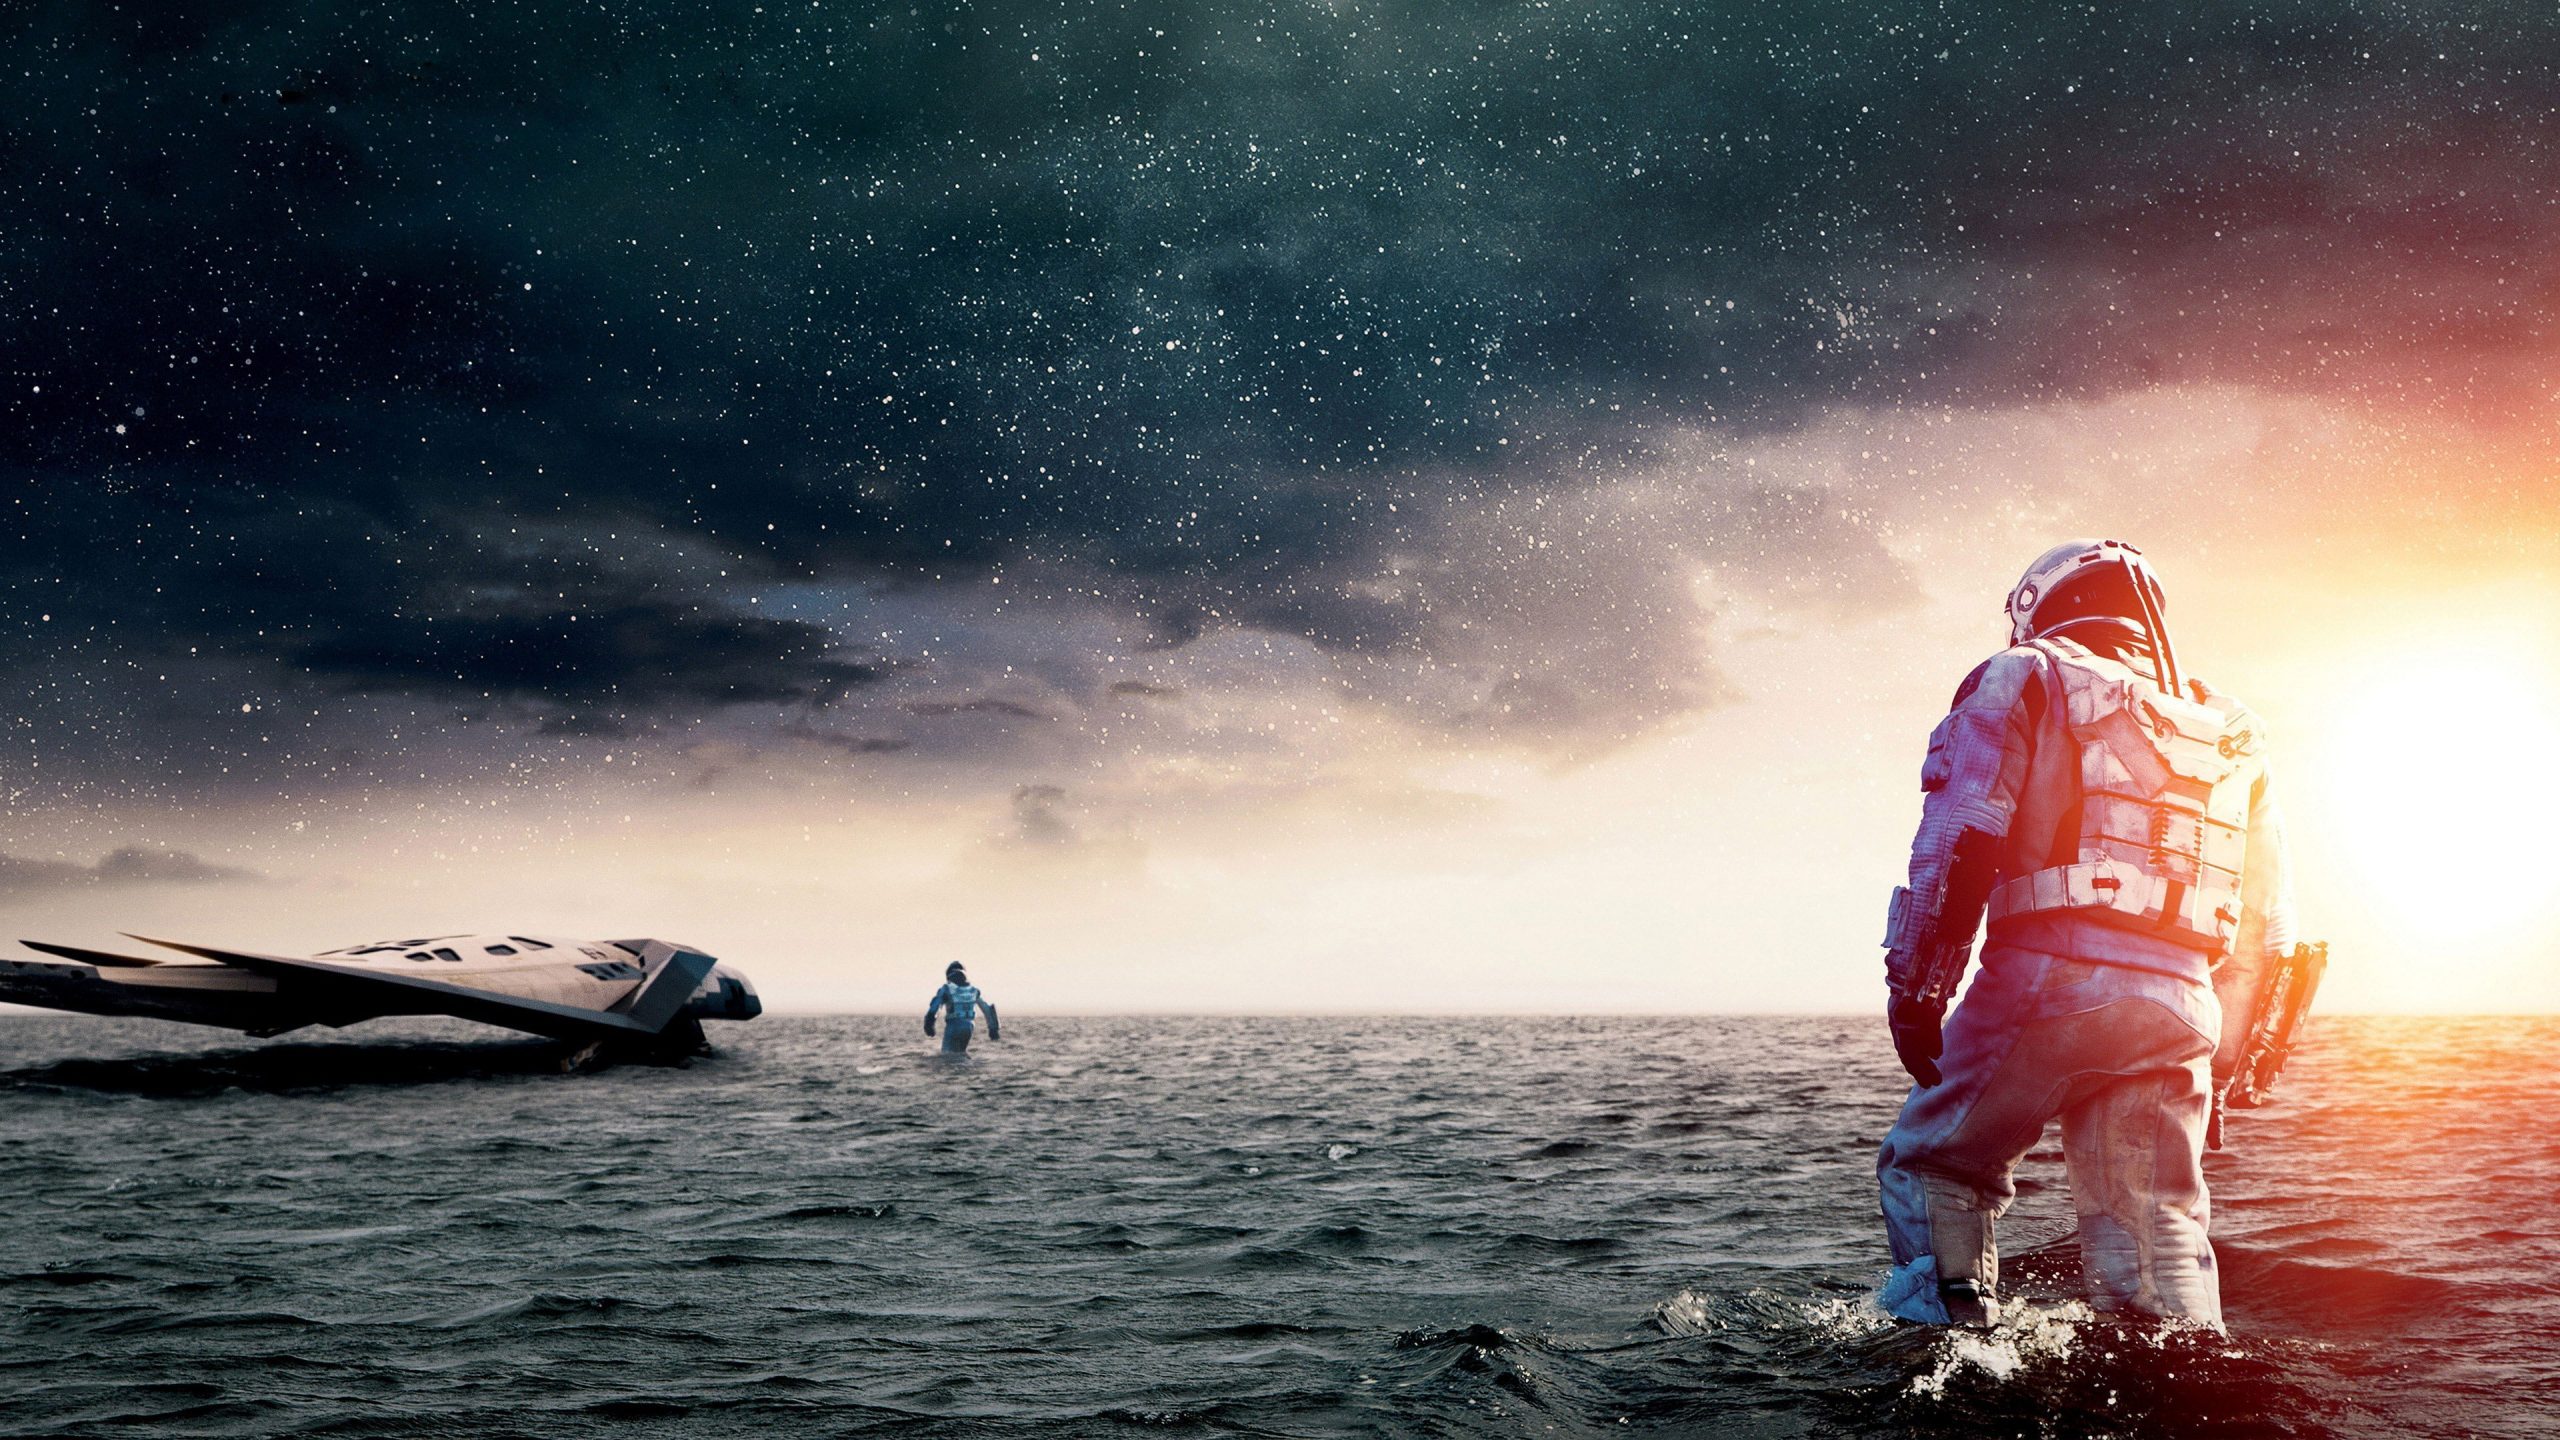 Interstellar (movie), movies, astronaut, sea